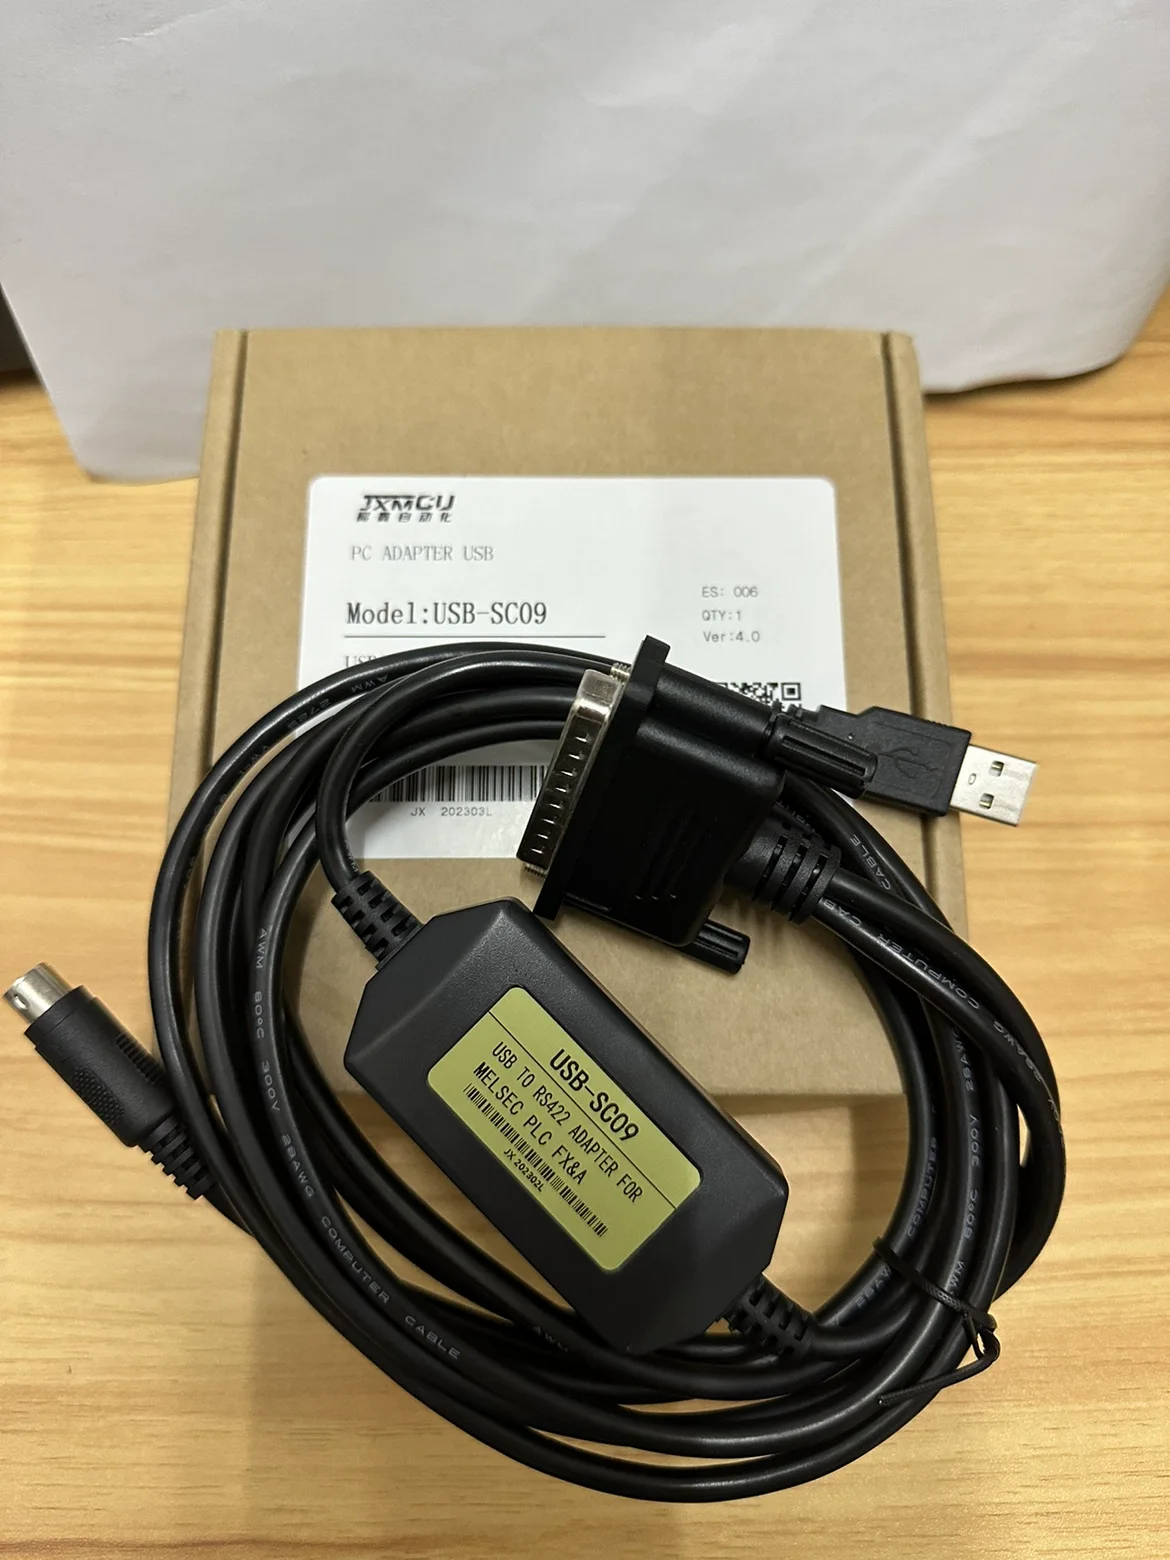 Mitsubishi programming cable USB-SC09